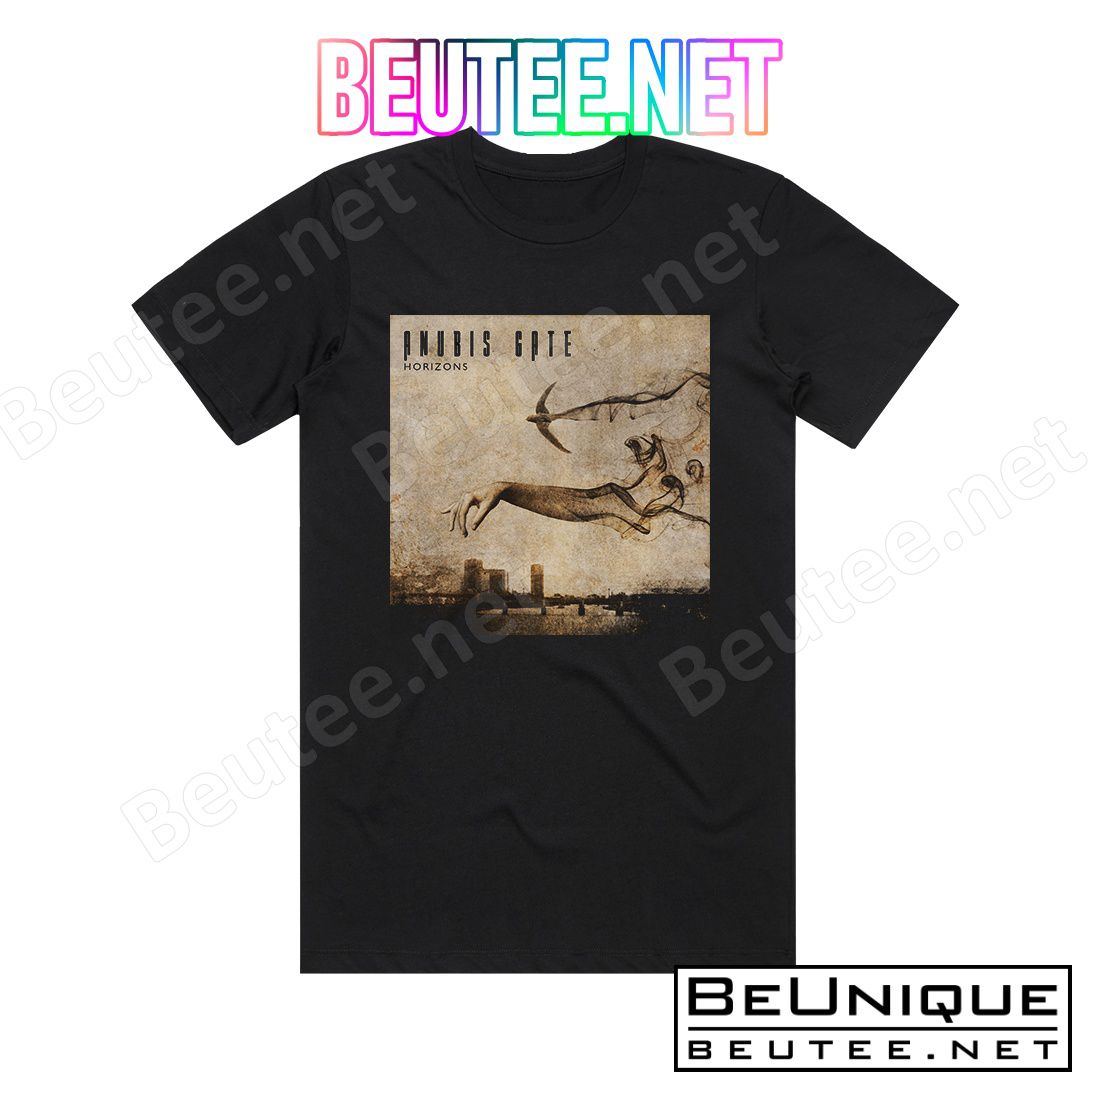 Anubis Gate Horizons Album Cover T-Shirt